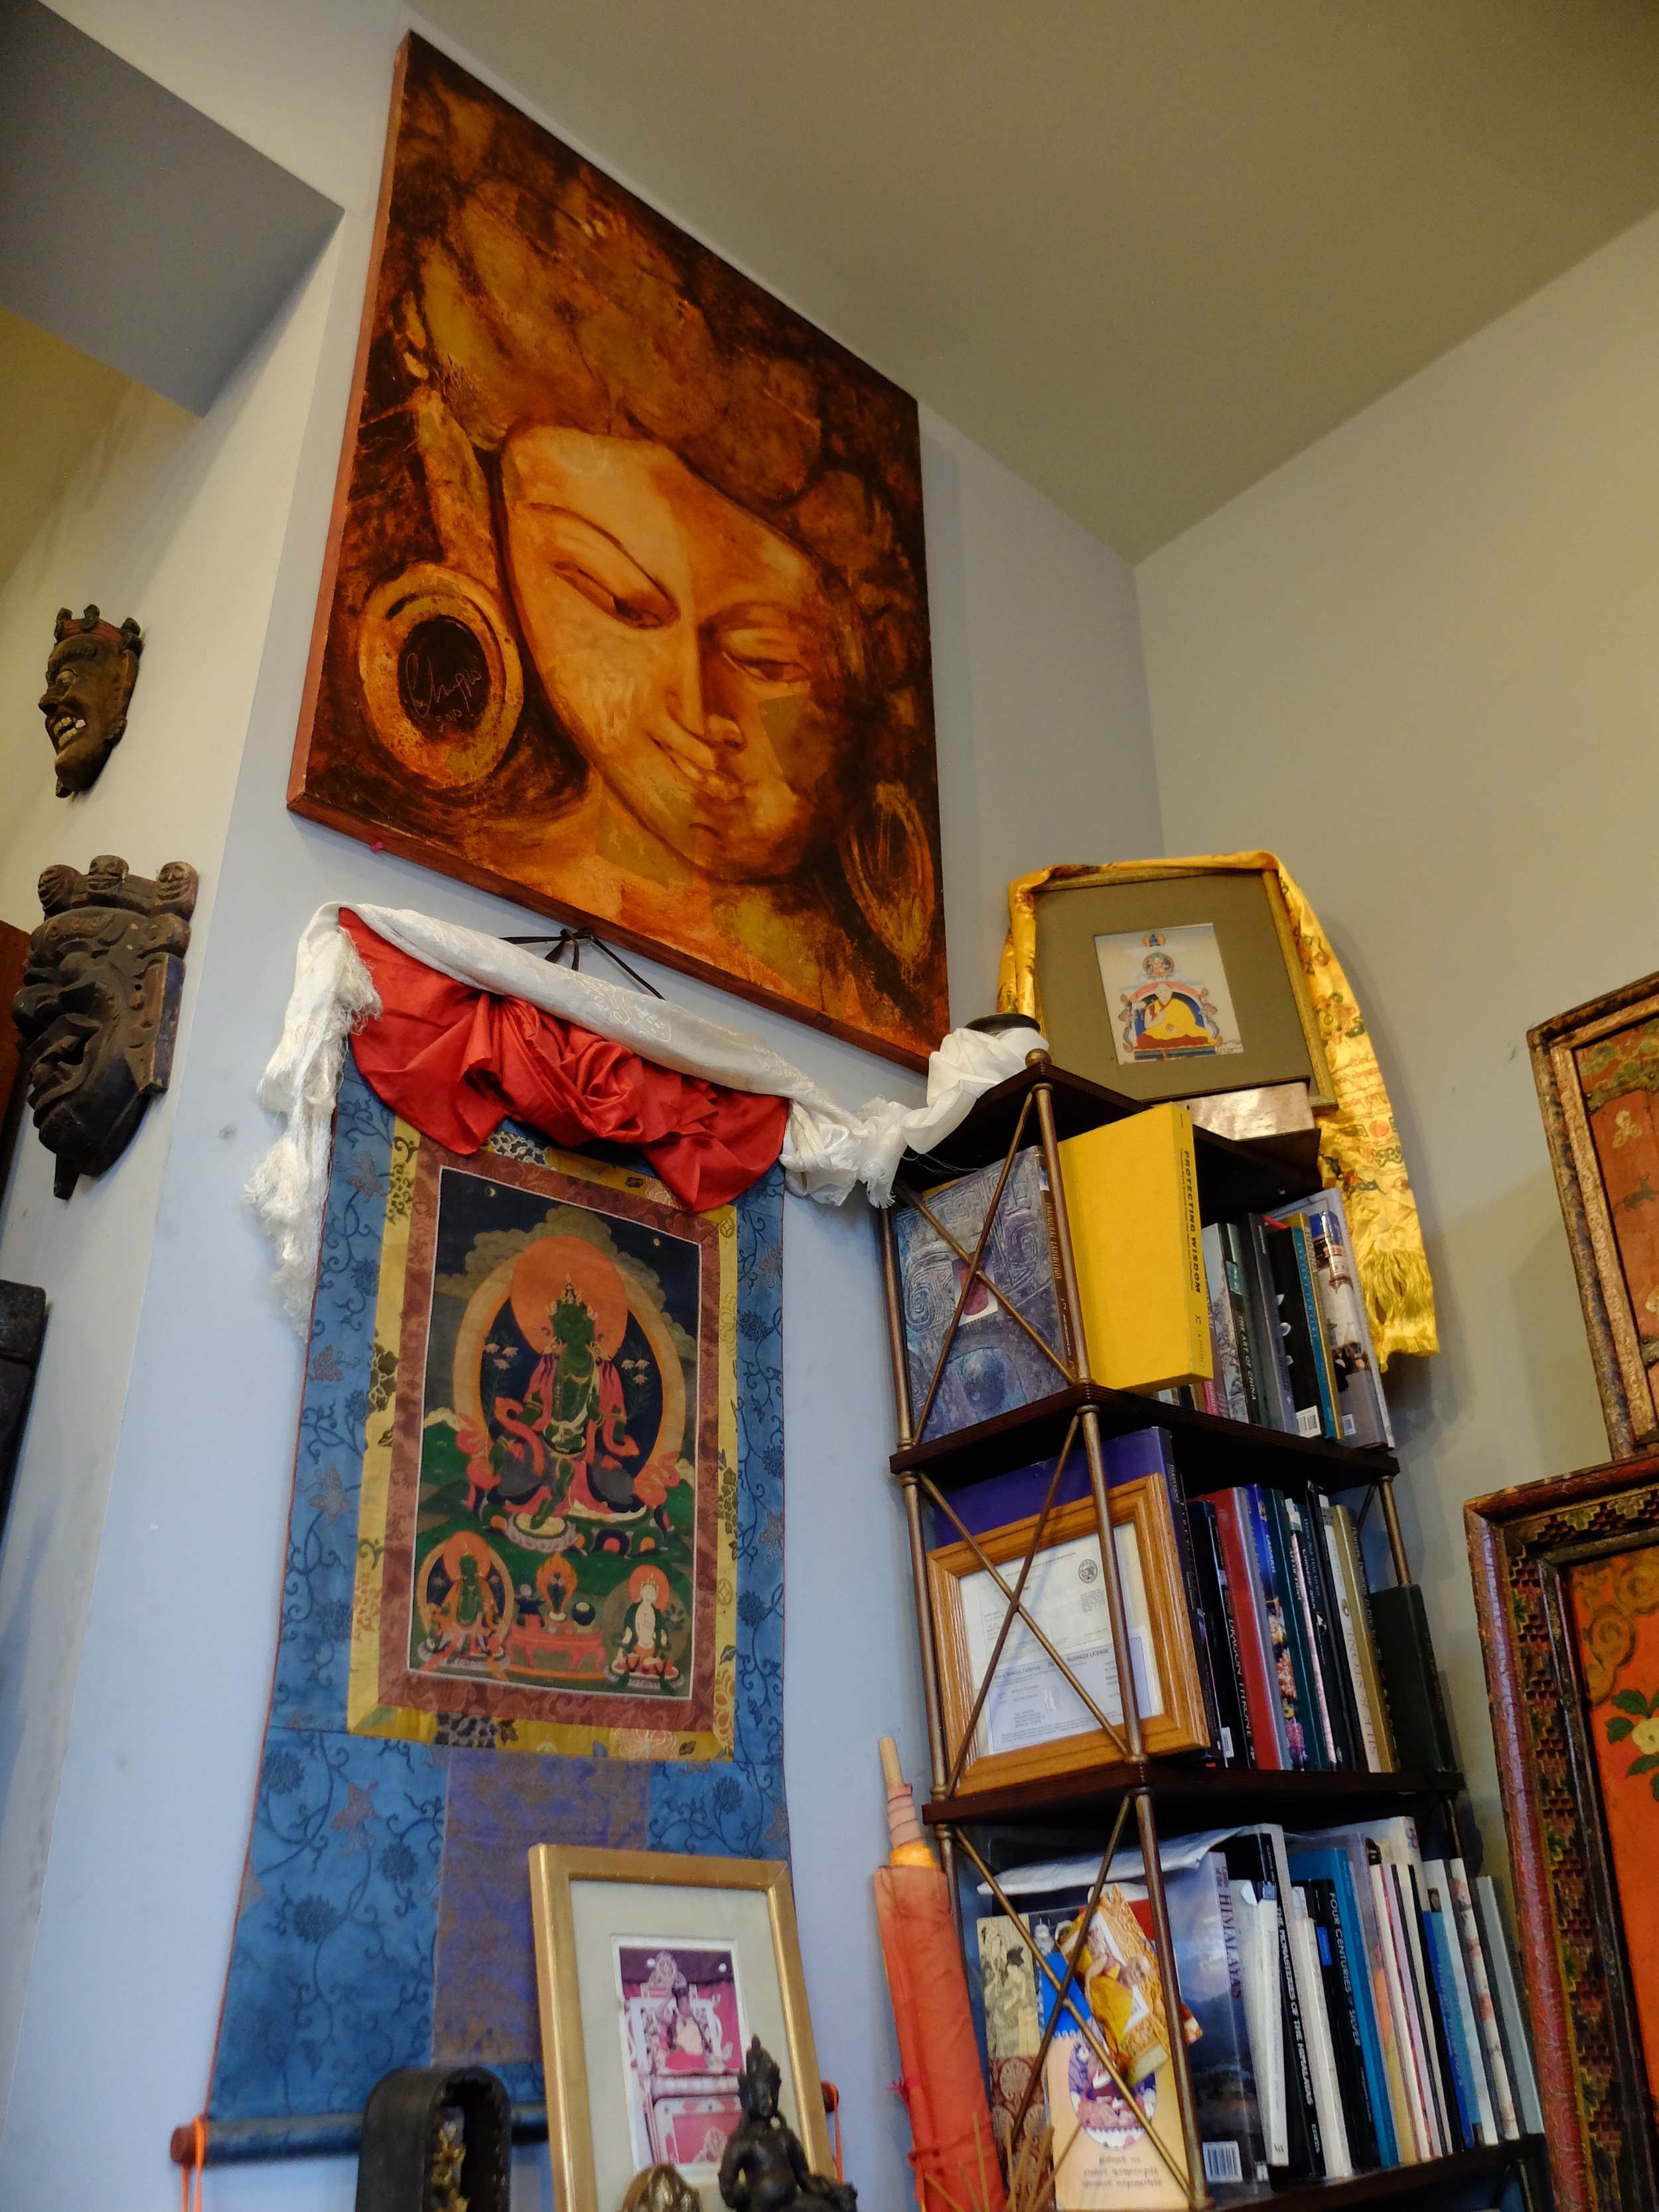 Tibet Arts on Shattuck Ave.